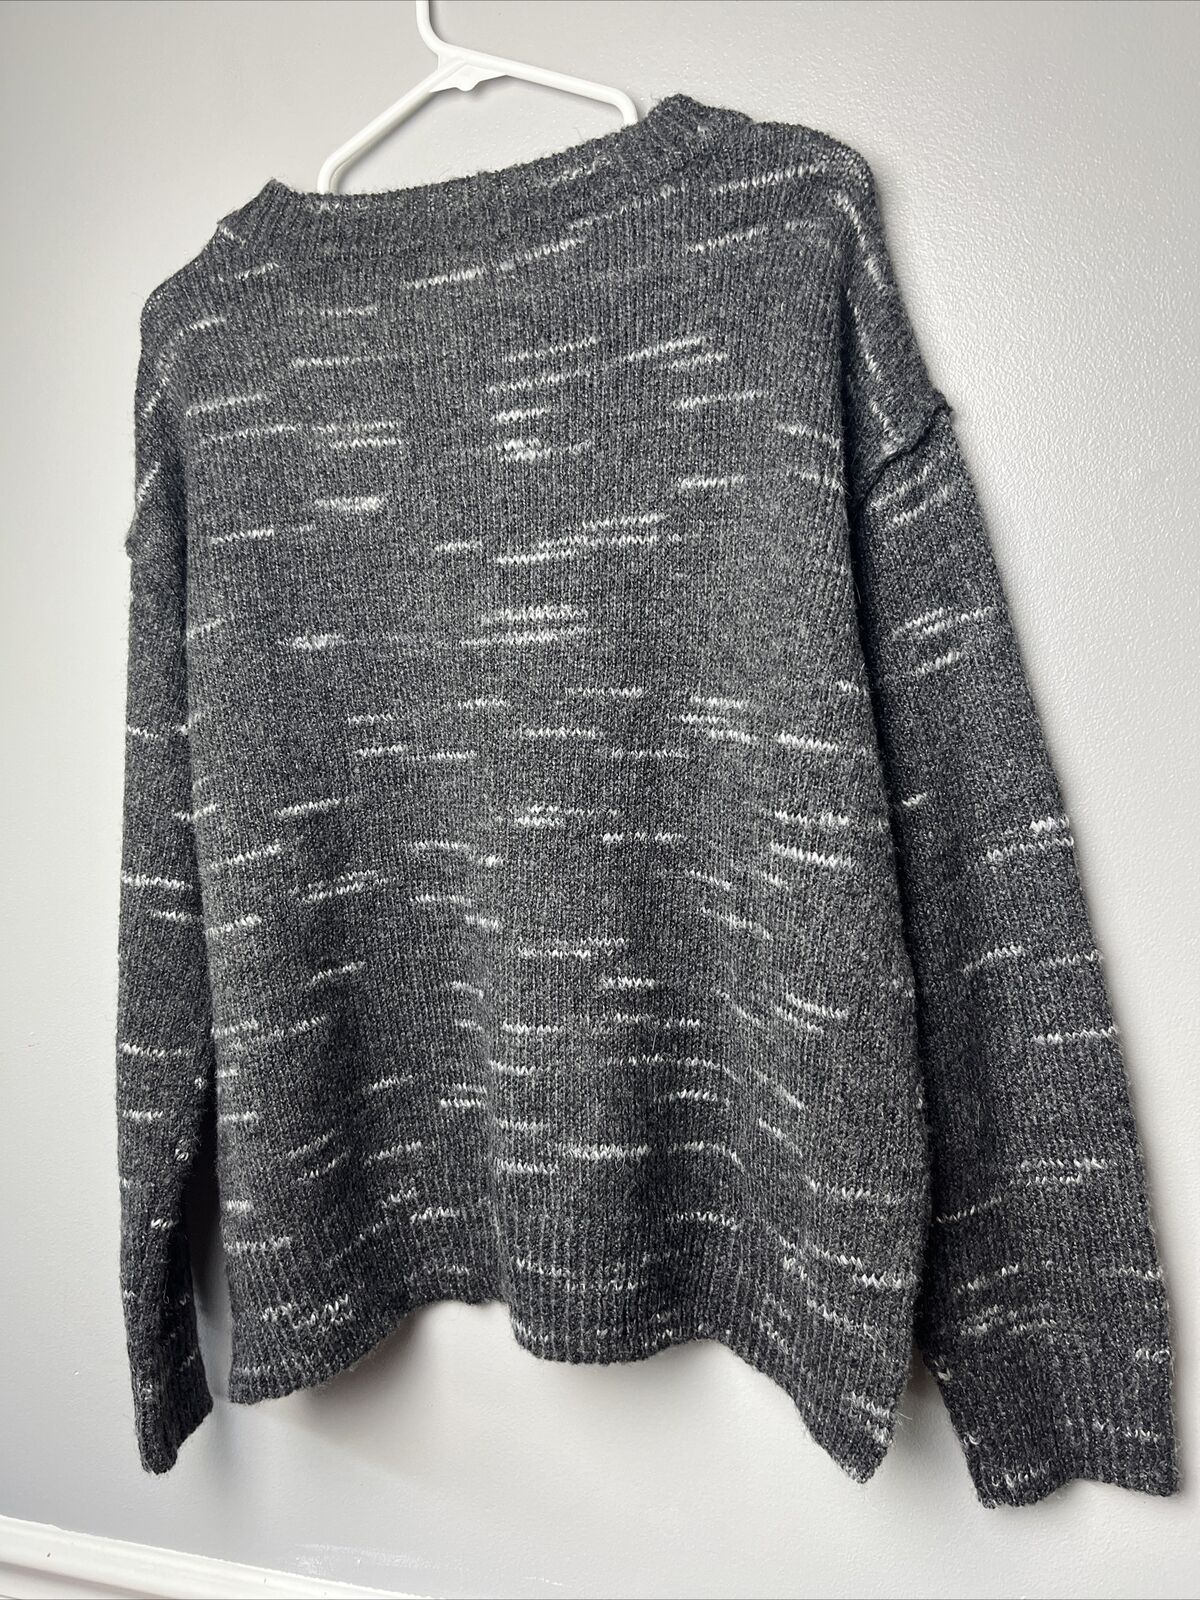 Max Studio Women's Crewneck Long-Sleeve Sweater - Black - M